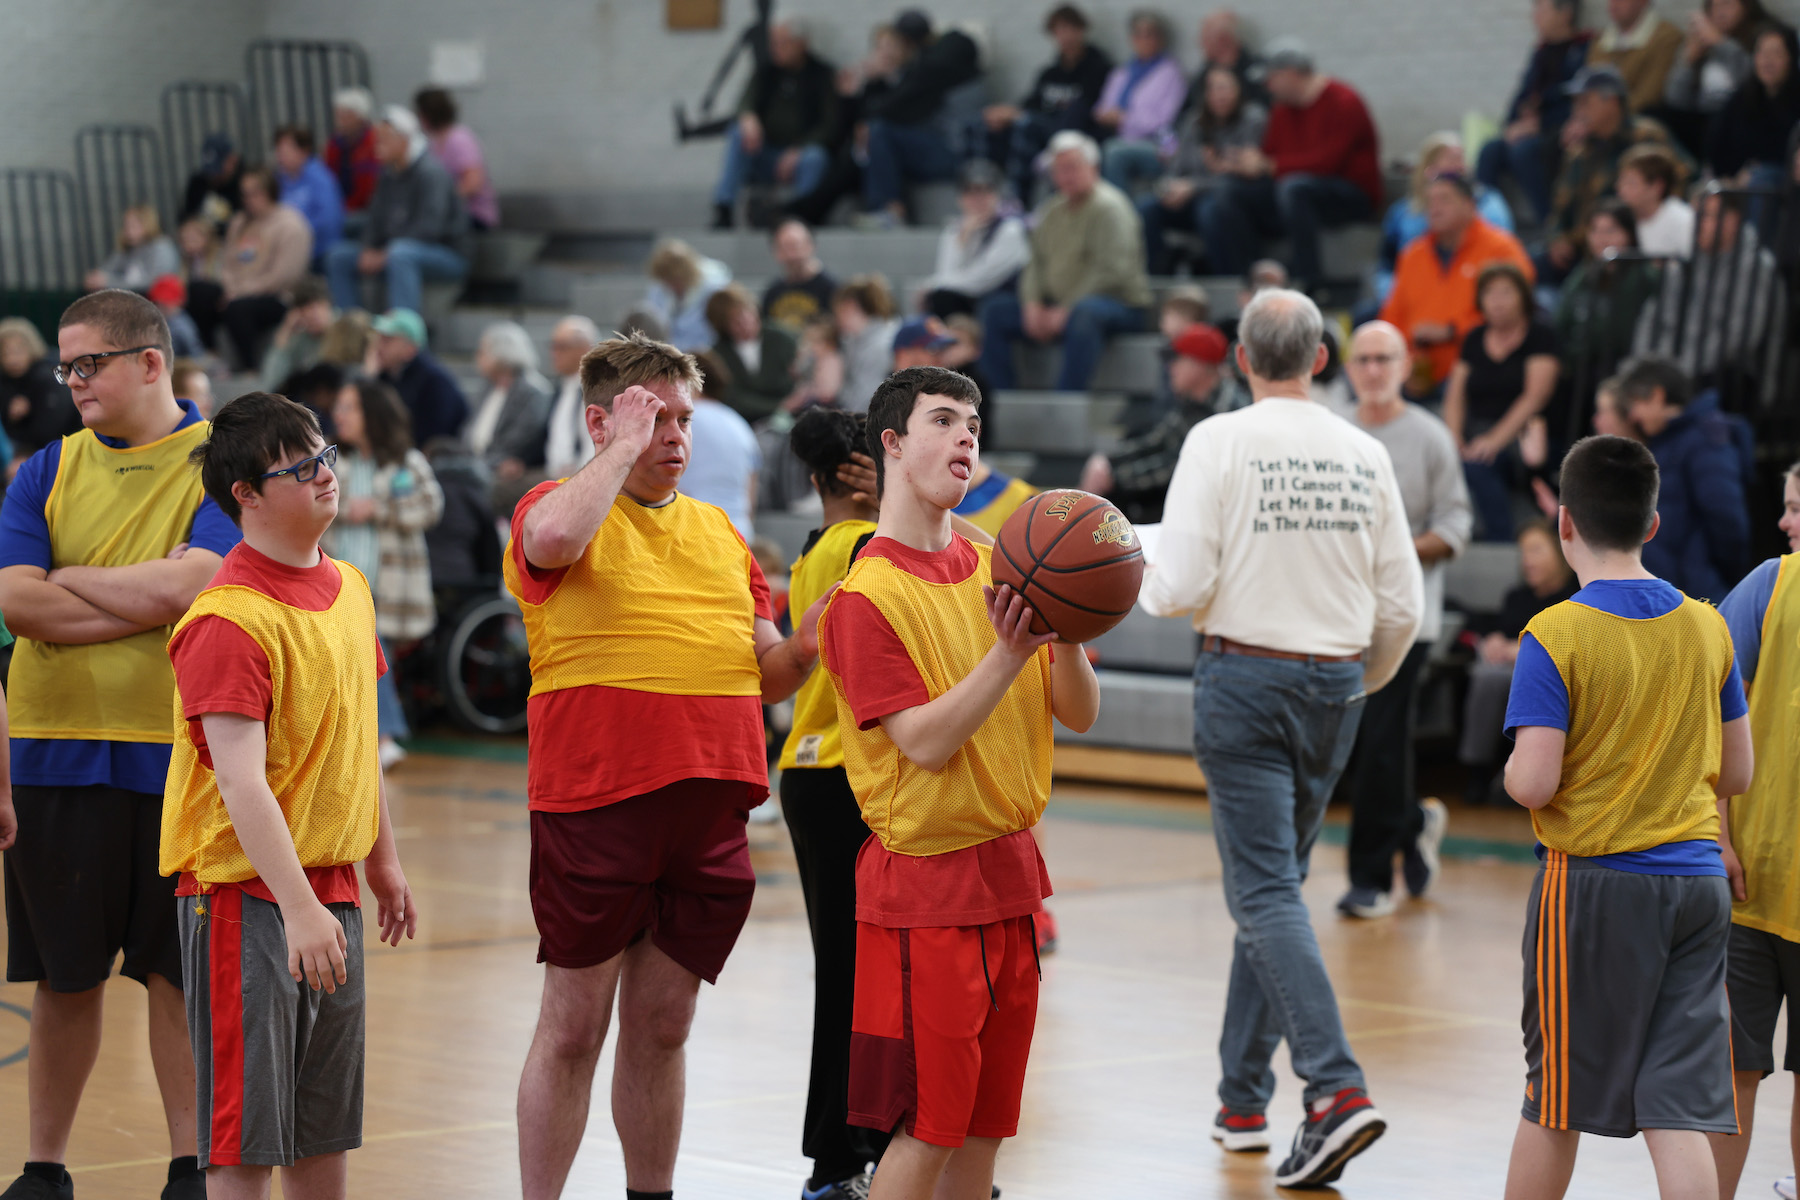 Photos: Special Olympics basketball vs. Hopkinton Police